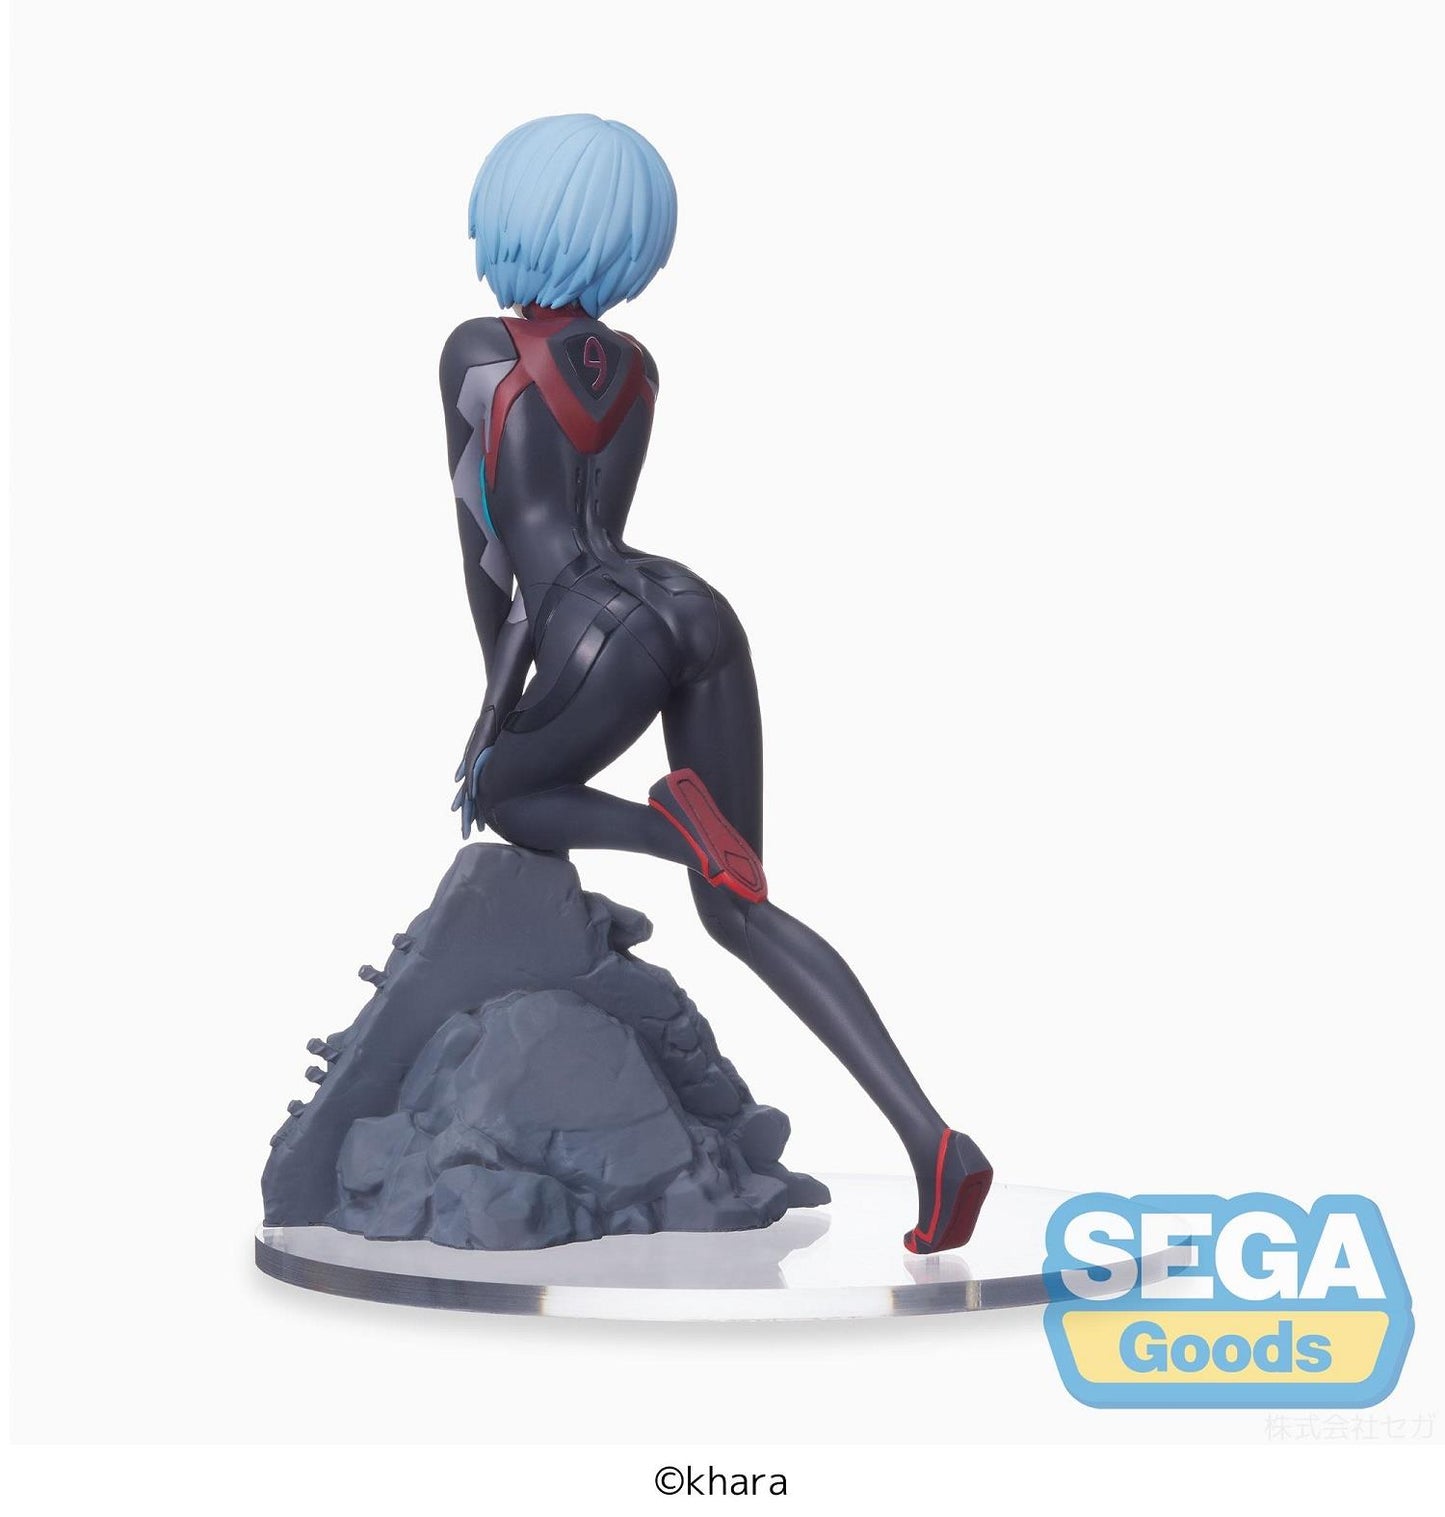 Evangelion: Rei Ayanami SPM Vignetteum Prize Figure